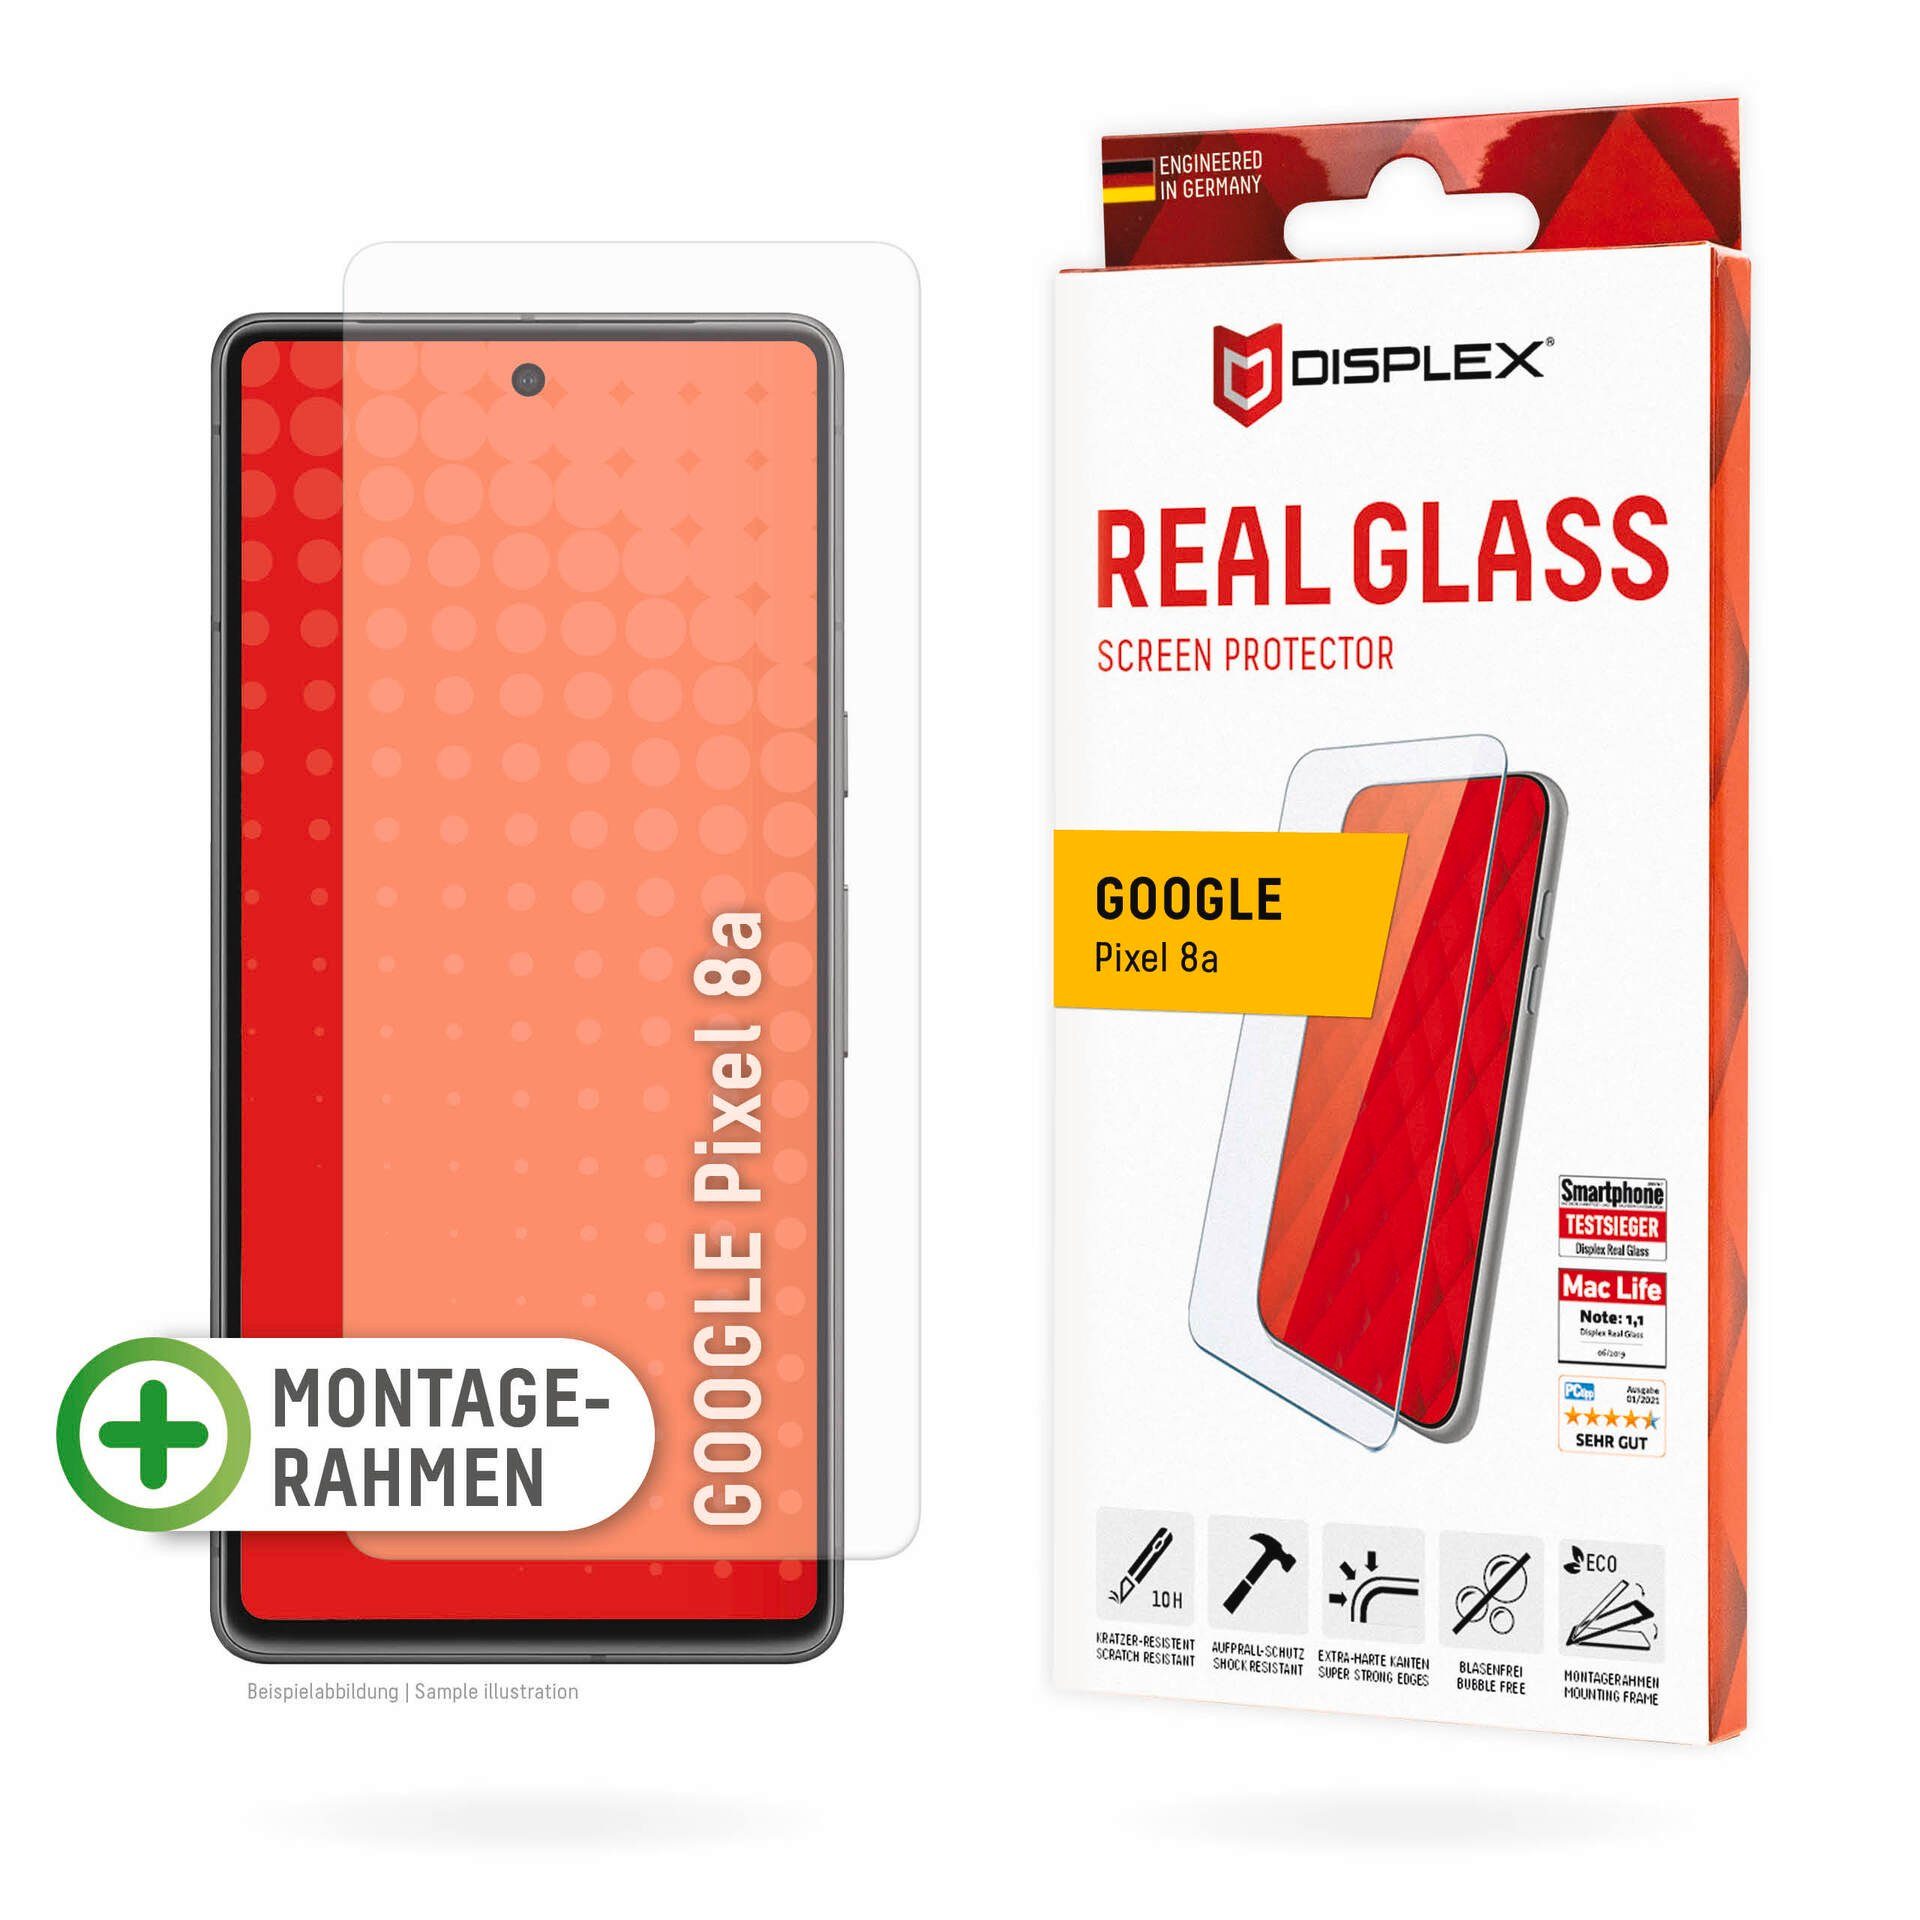 Displex Real Glass für Google Pixel 8a, Displayschutzglas, Displayschutzfolie Displayschutz kratzer-resistent 10H splitterfest